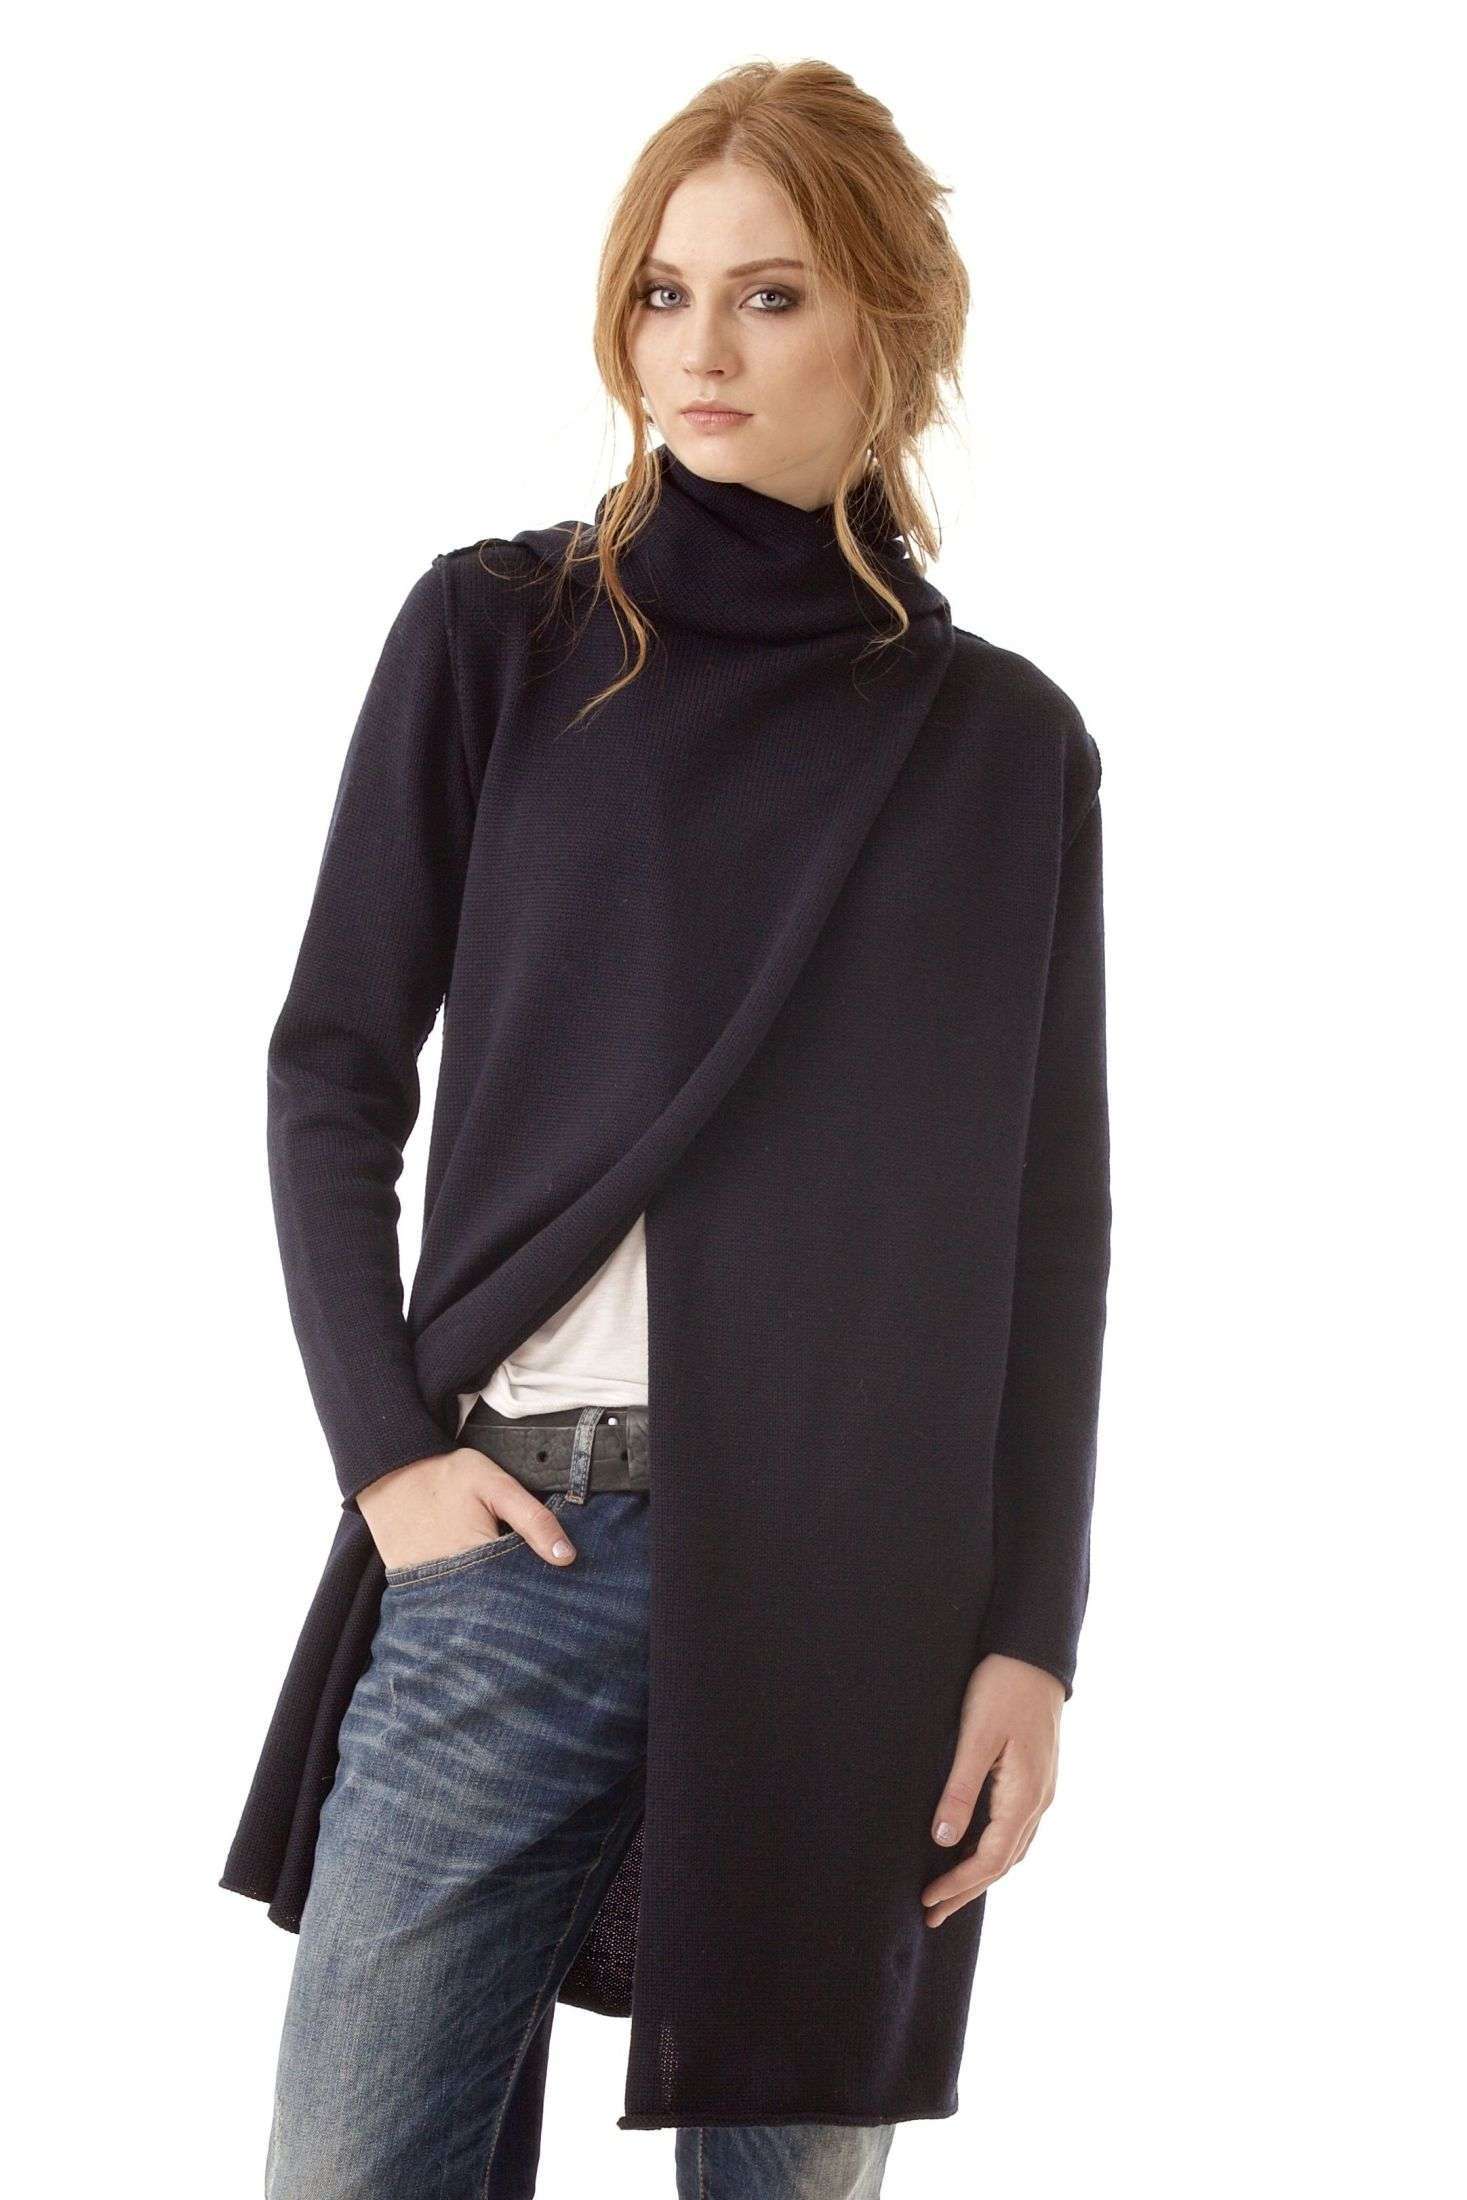 Long wrap cardigan ODETTE made of 100% merino wool, color black